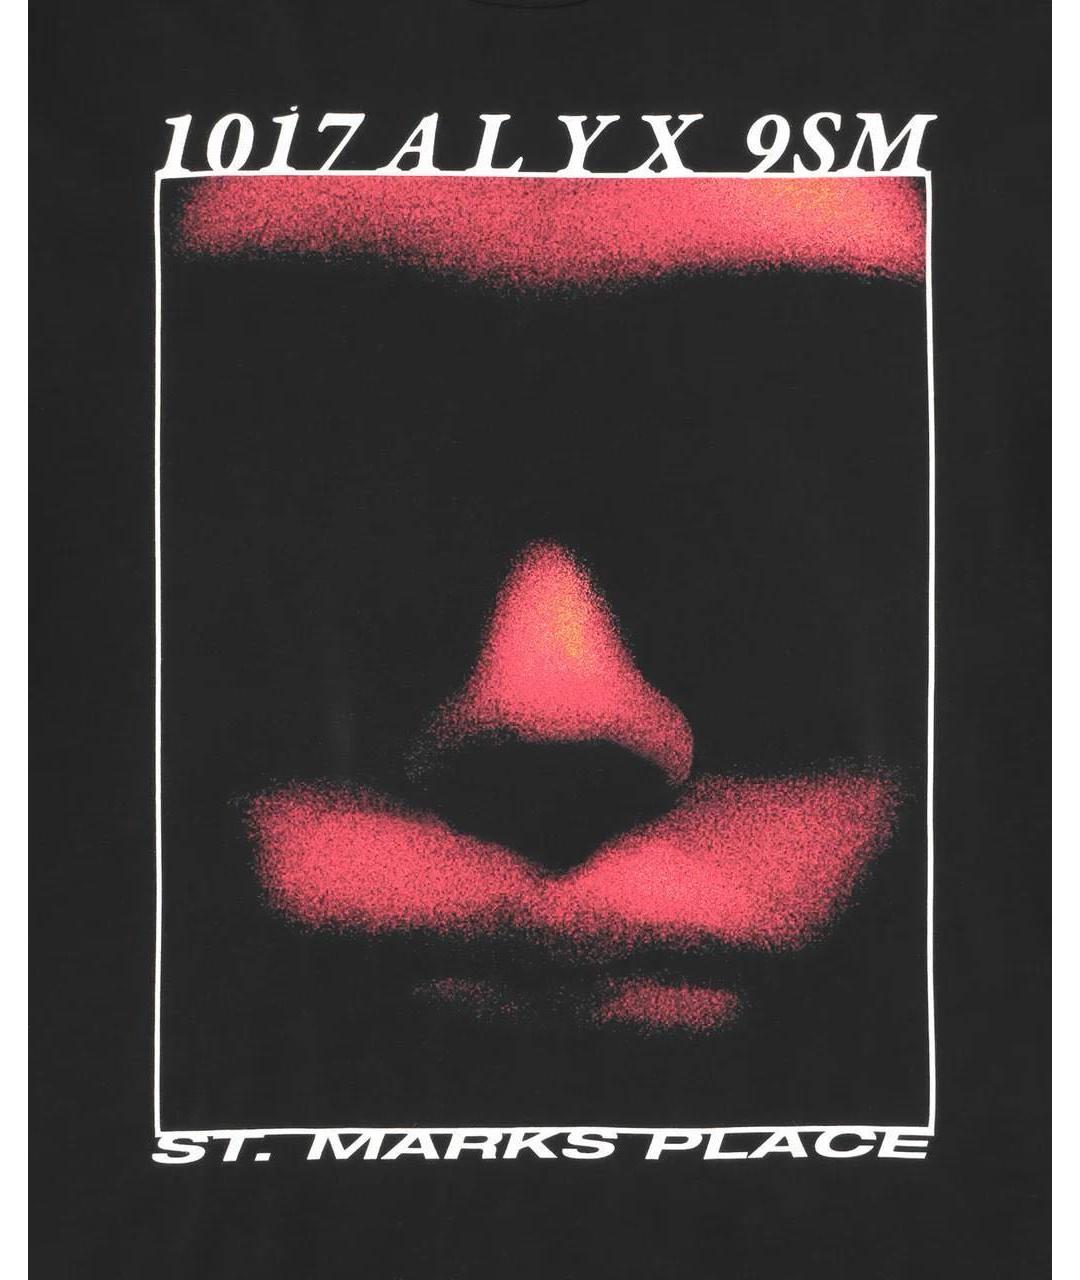 1017 ALYX 9SM Черная хлопковая футболка, фото 4